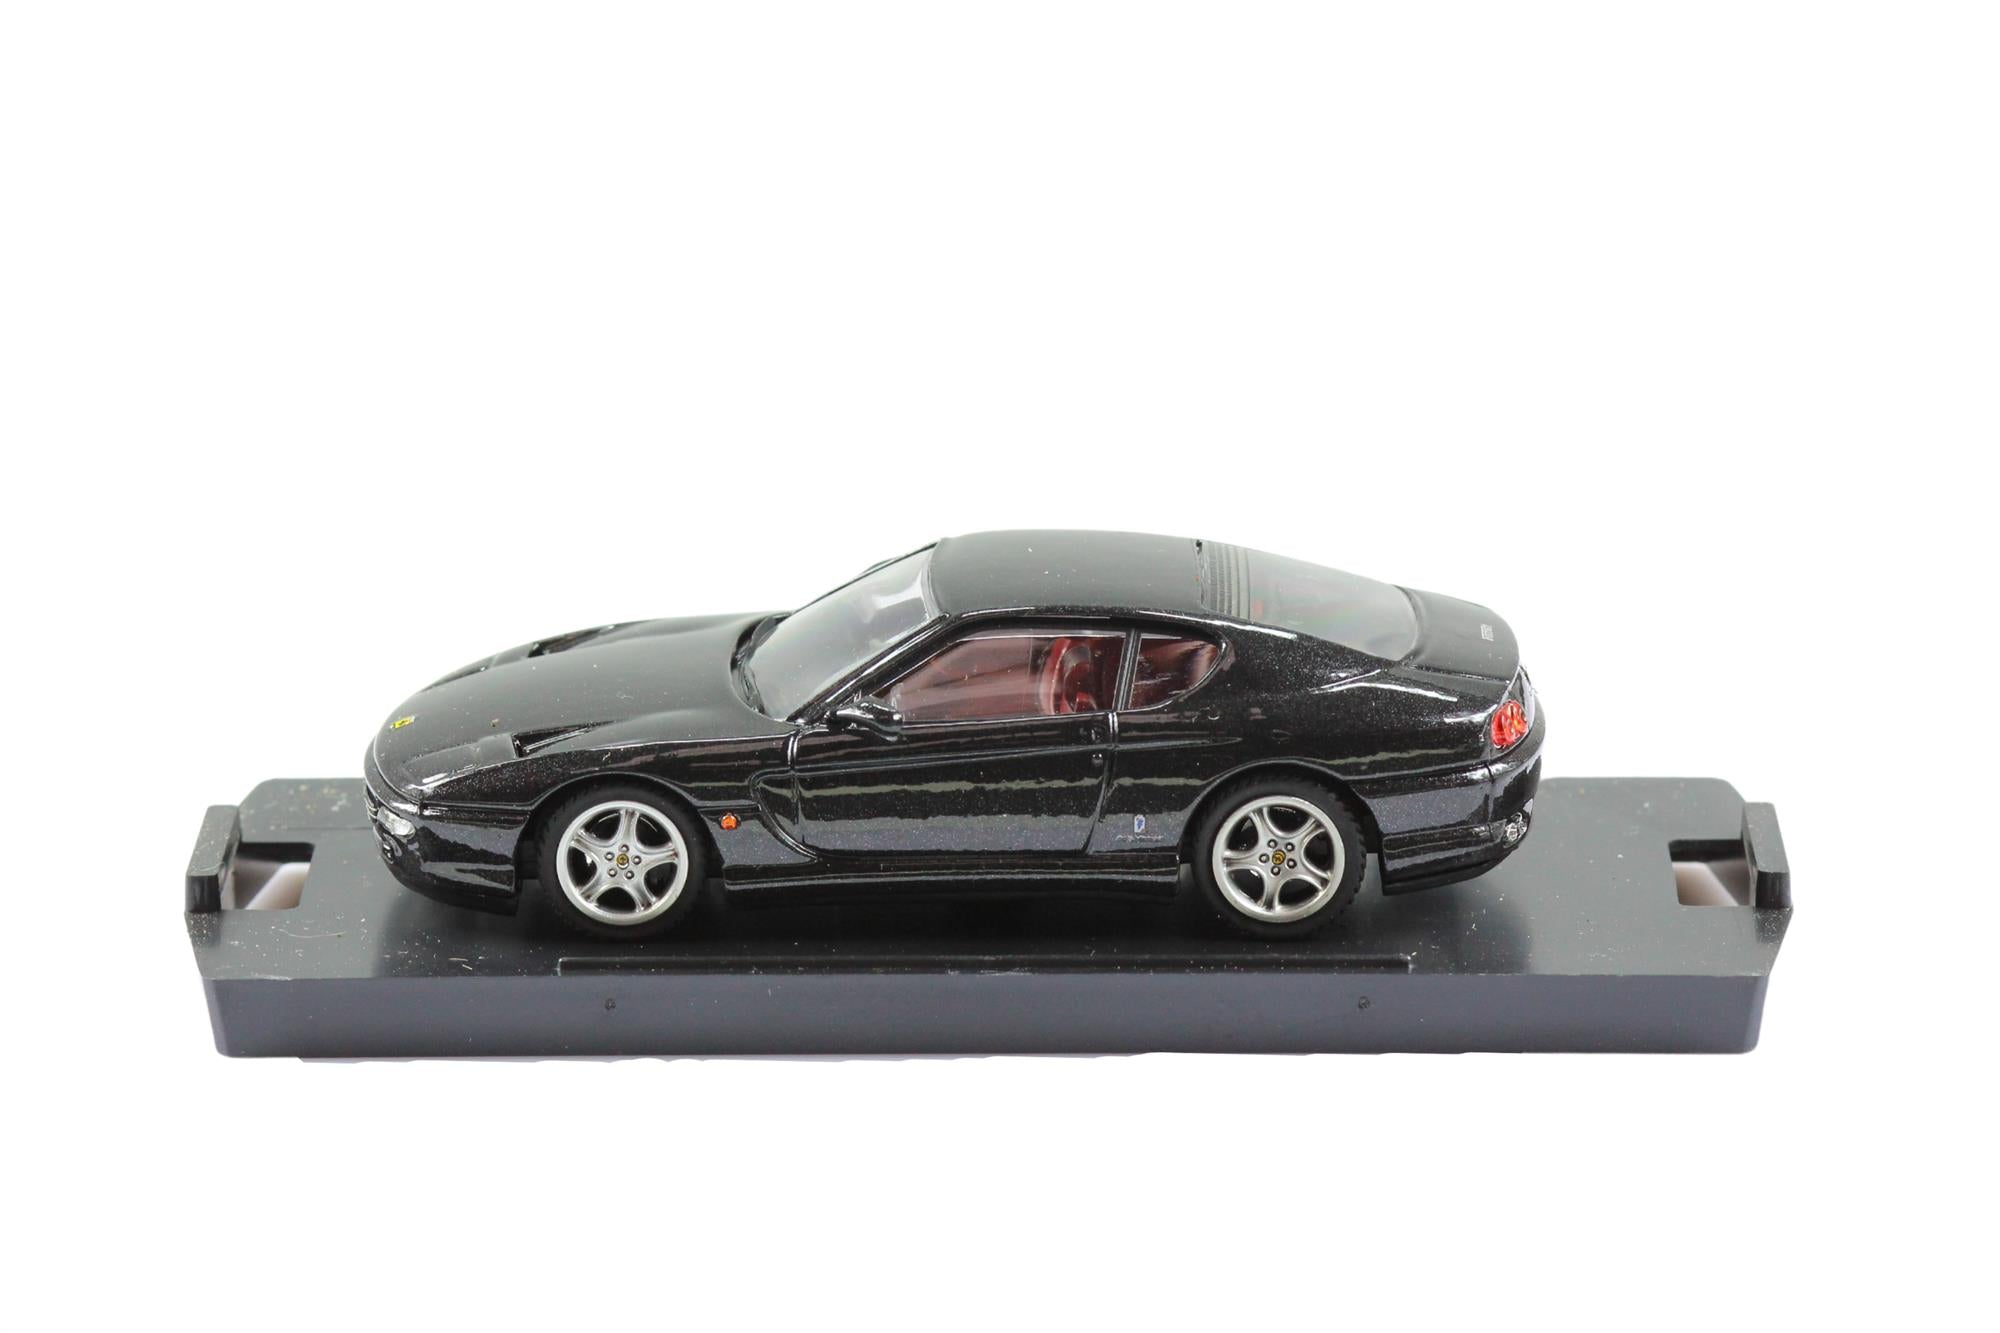 Bang Models - 1:43 Scale Diecast Ferrari 456 GT "Stradale" Metallic Black - Toptoys2u